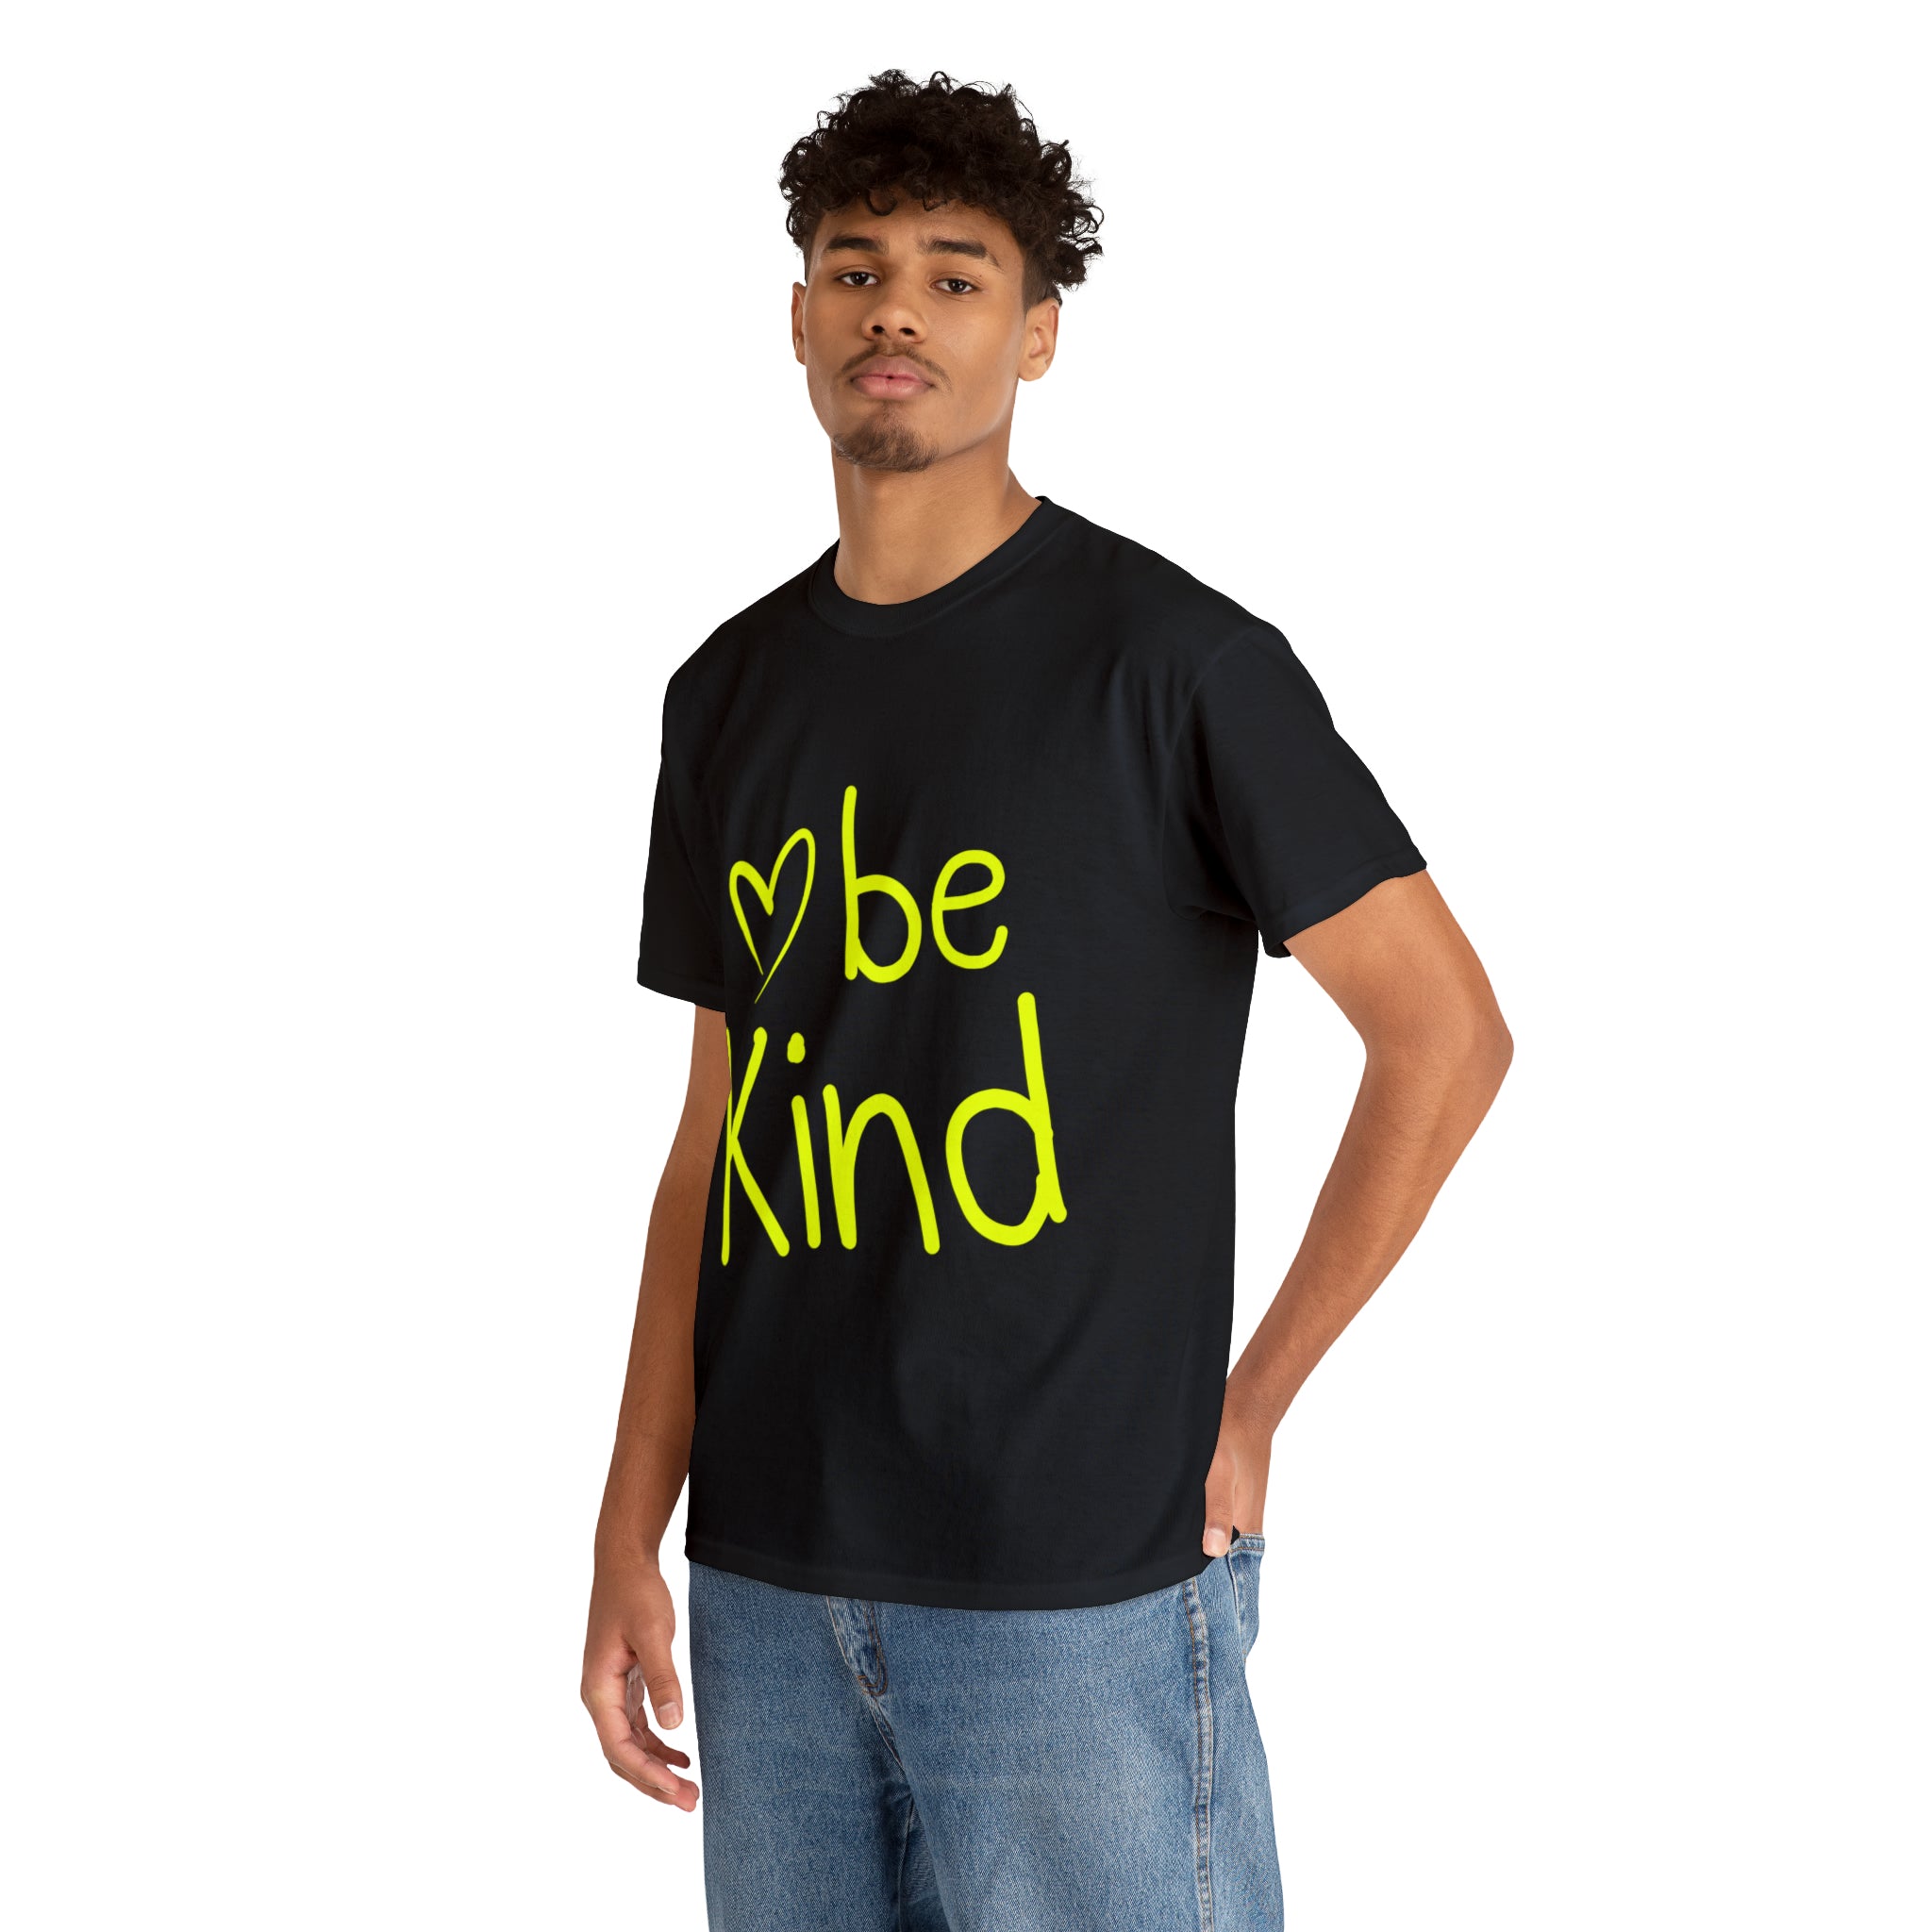 Be Kind T-Shirt Designed by Big Brain Brew